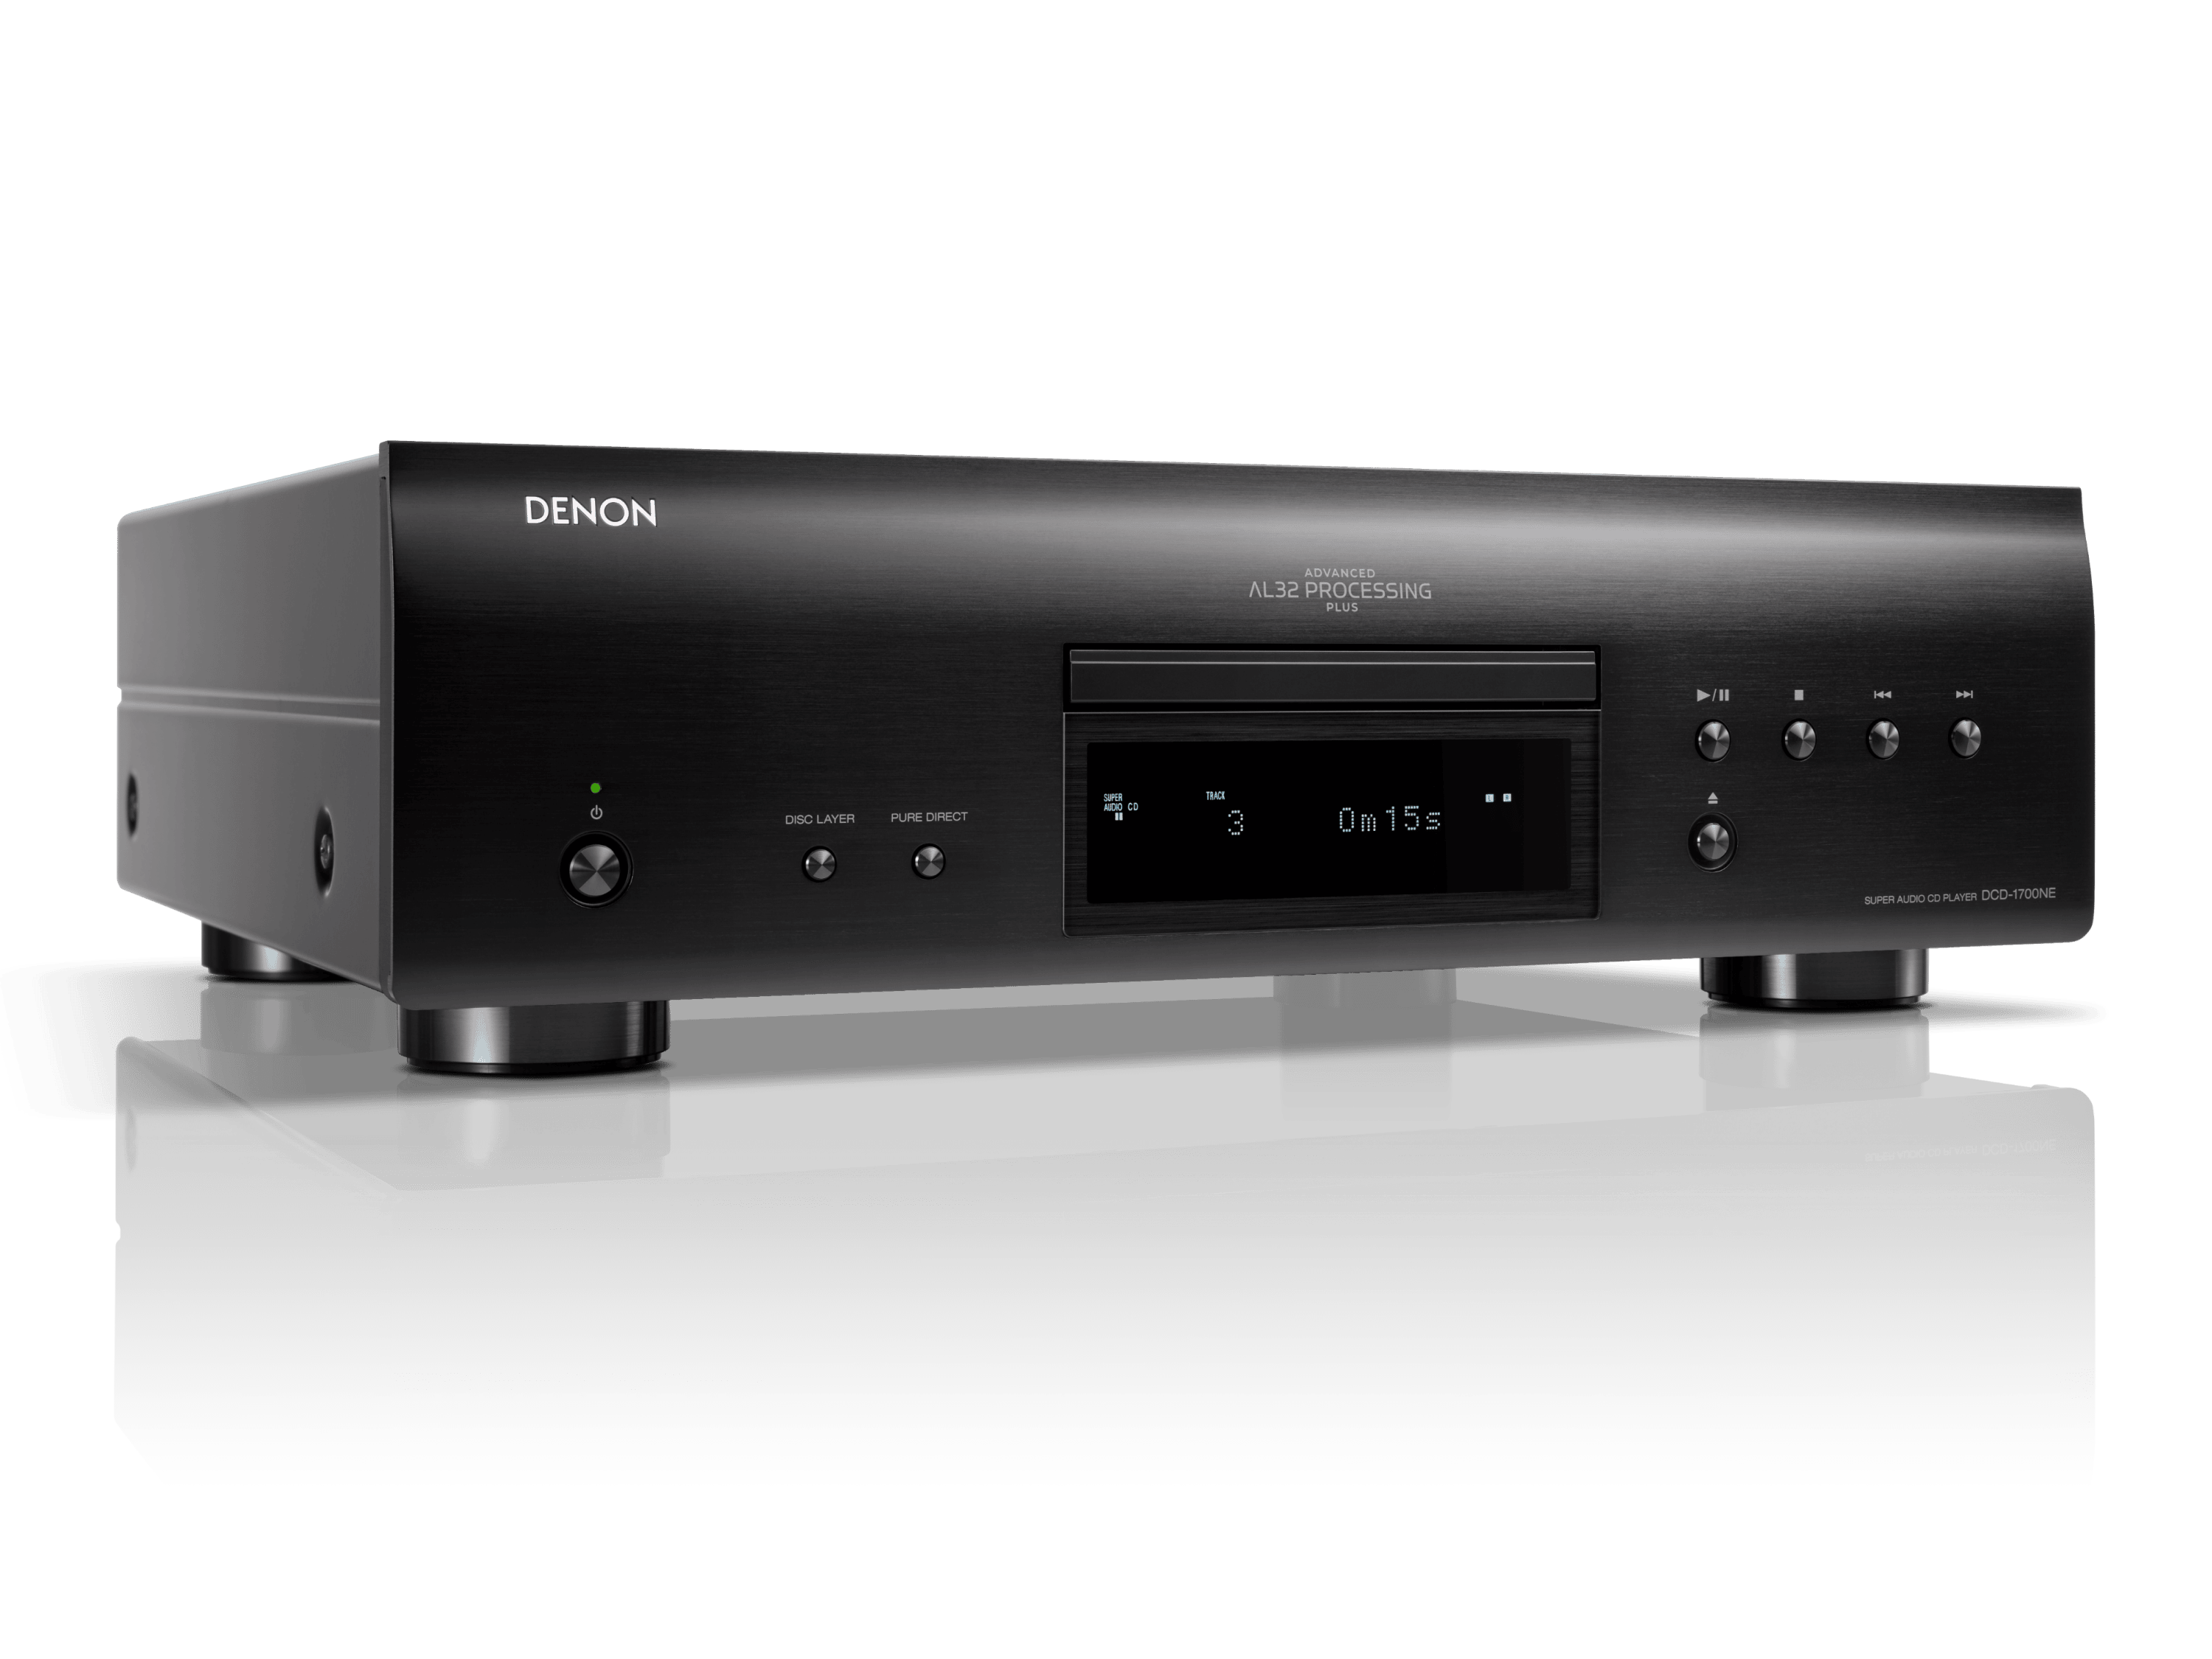 DCD-1700NE - CD/SACD-Player DCD-1700NE AL32 Advanced mit - Plus Processing Denon Europe 